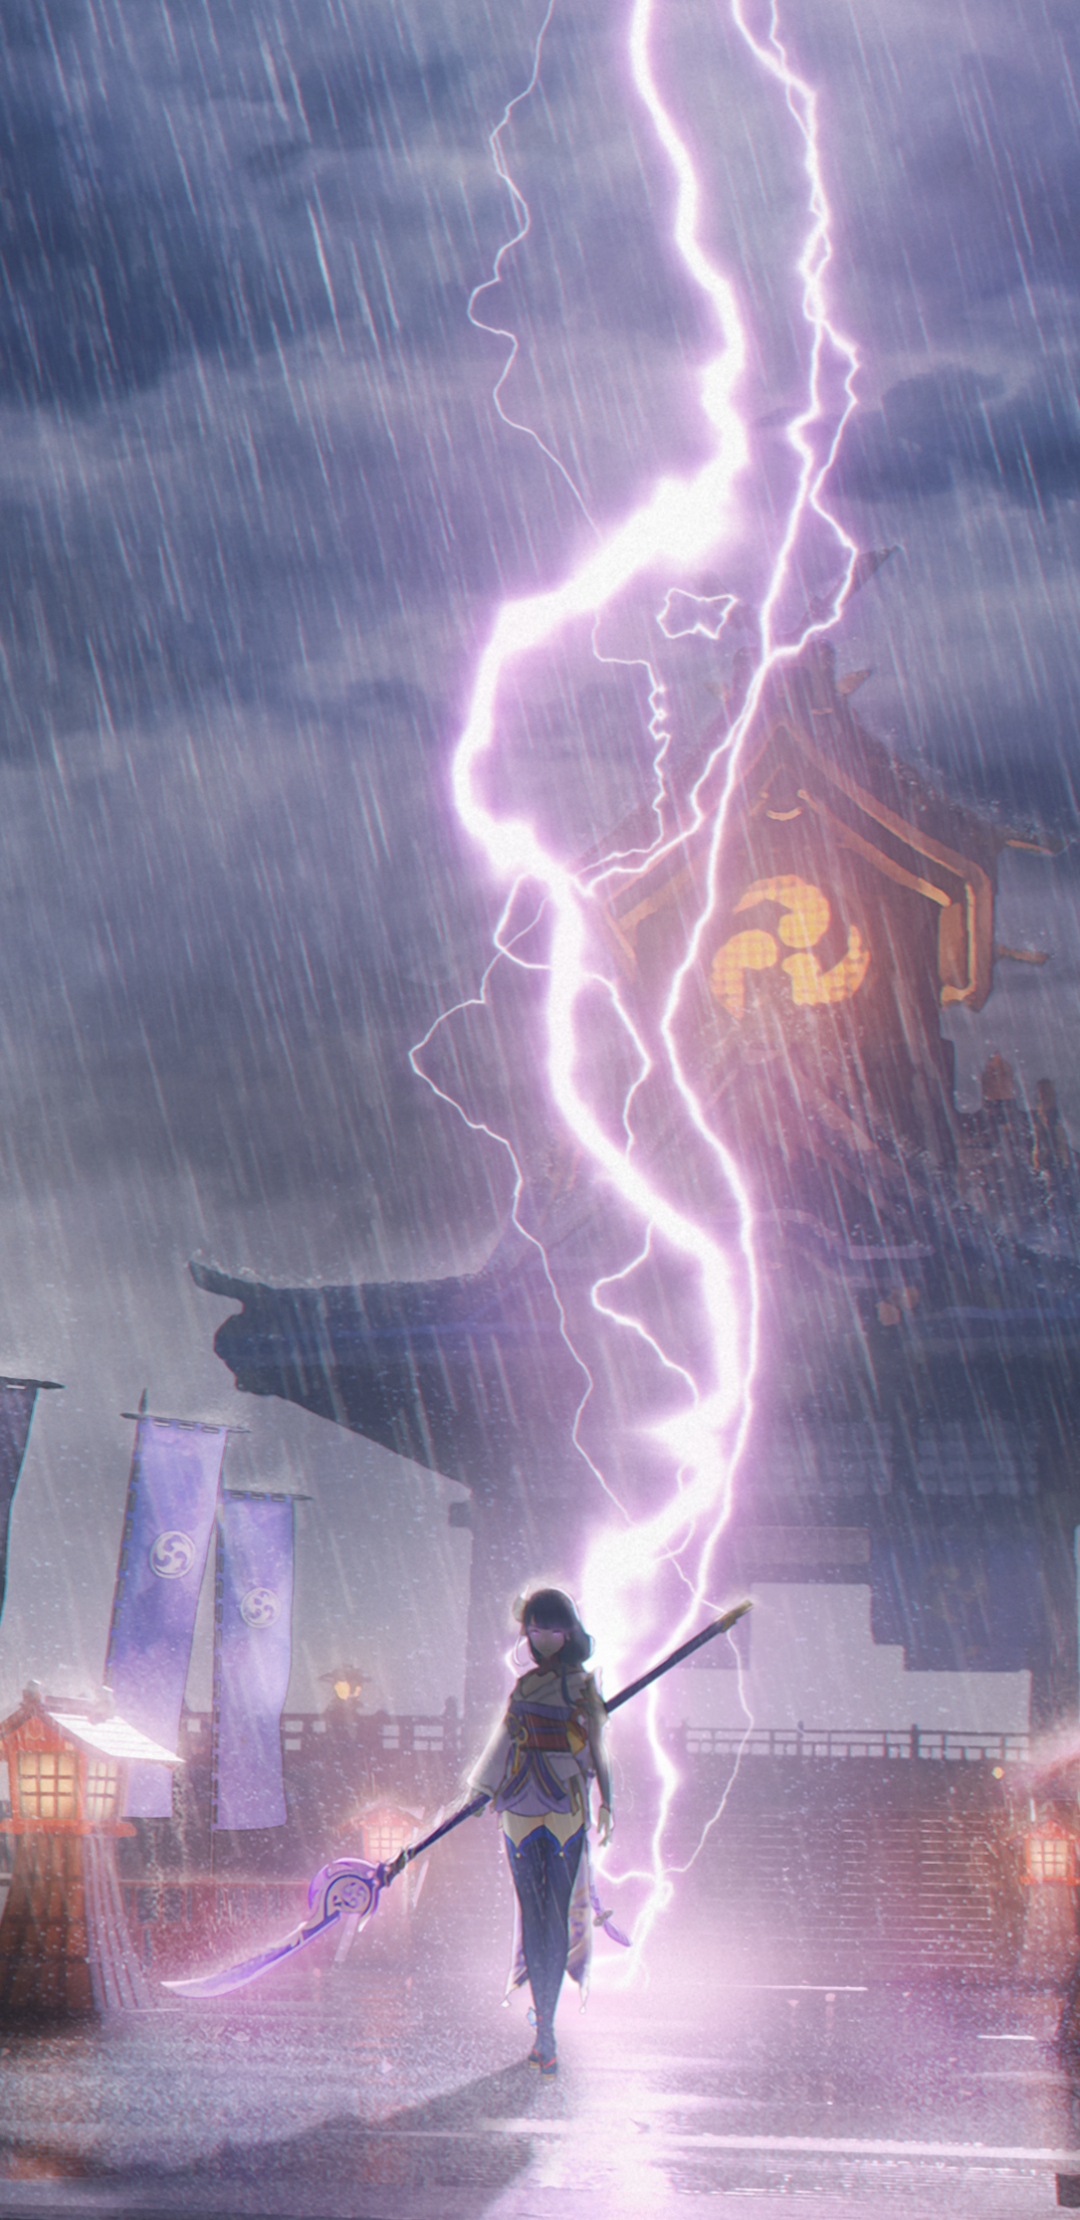 Raiden Shogun Wallpapers  Top 30 Best Raiden Shogun Backgrounds Download